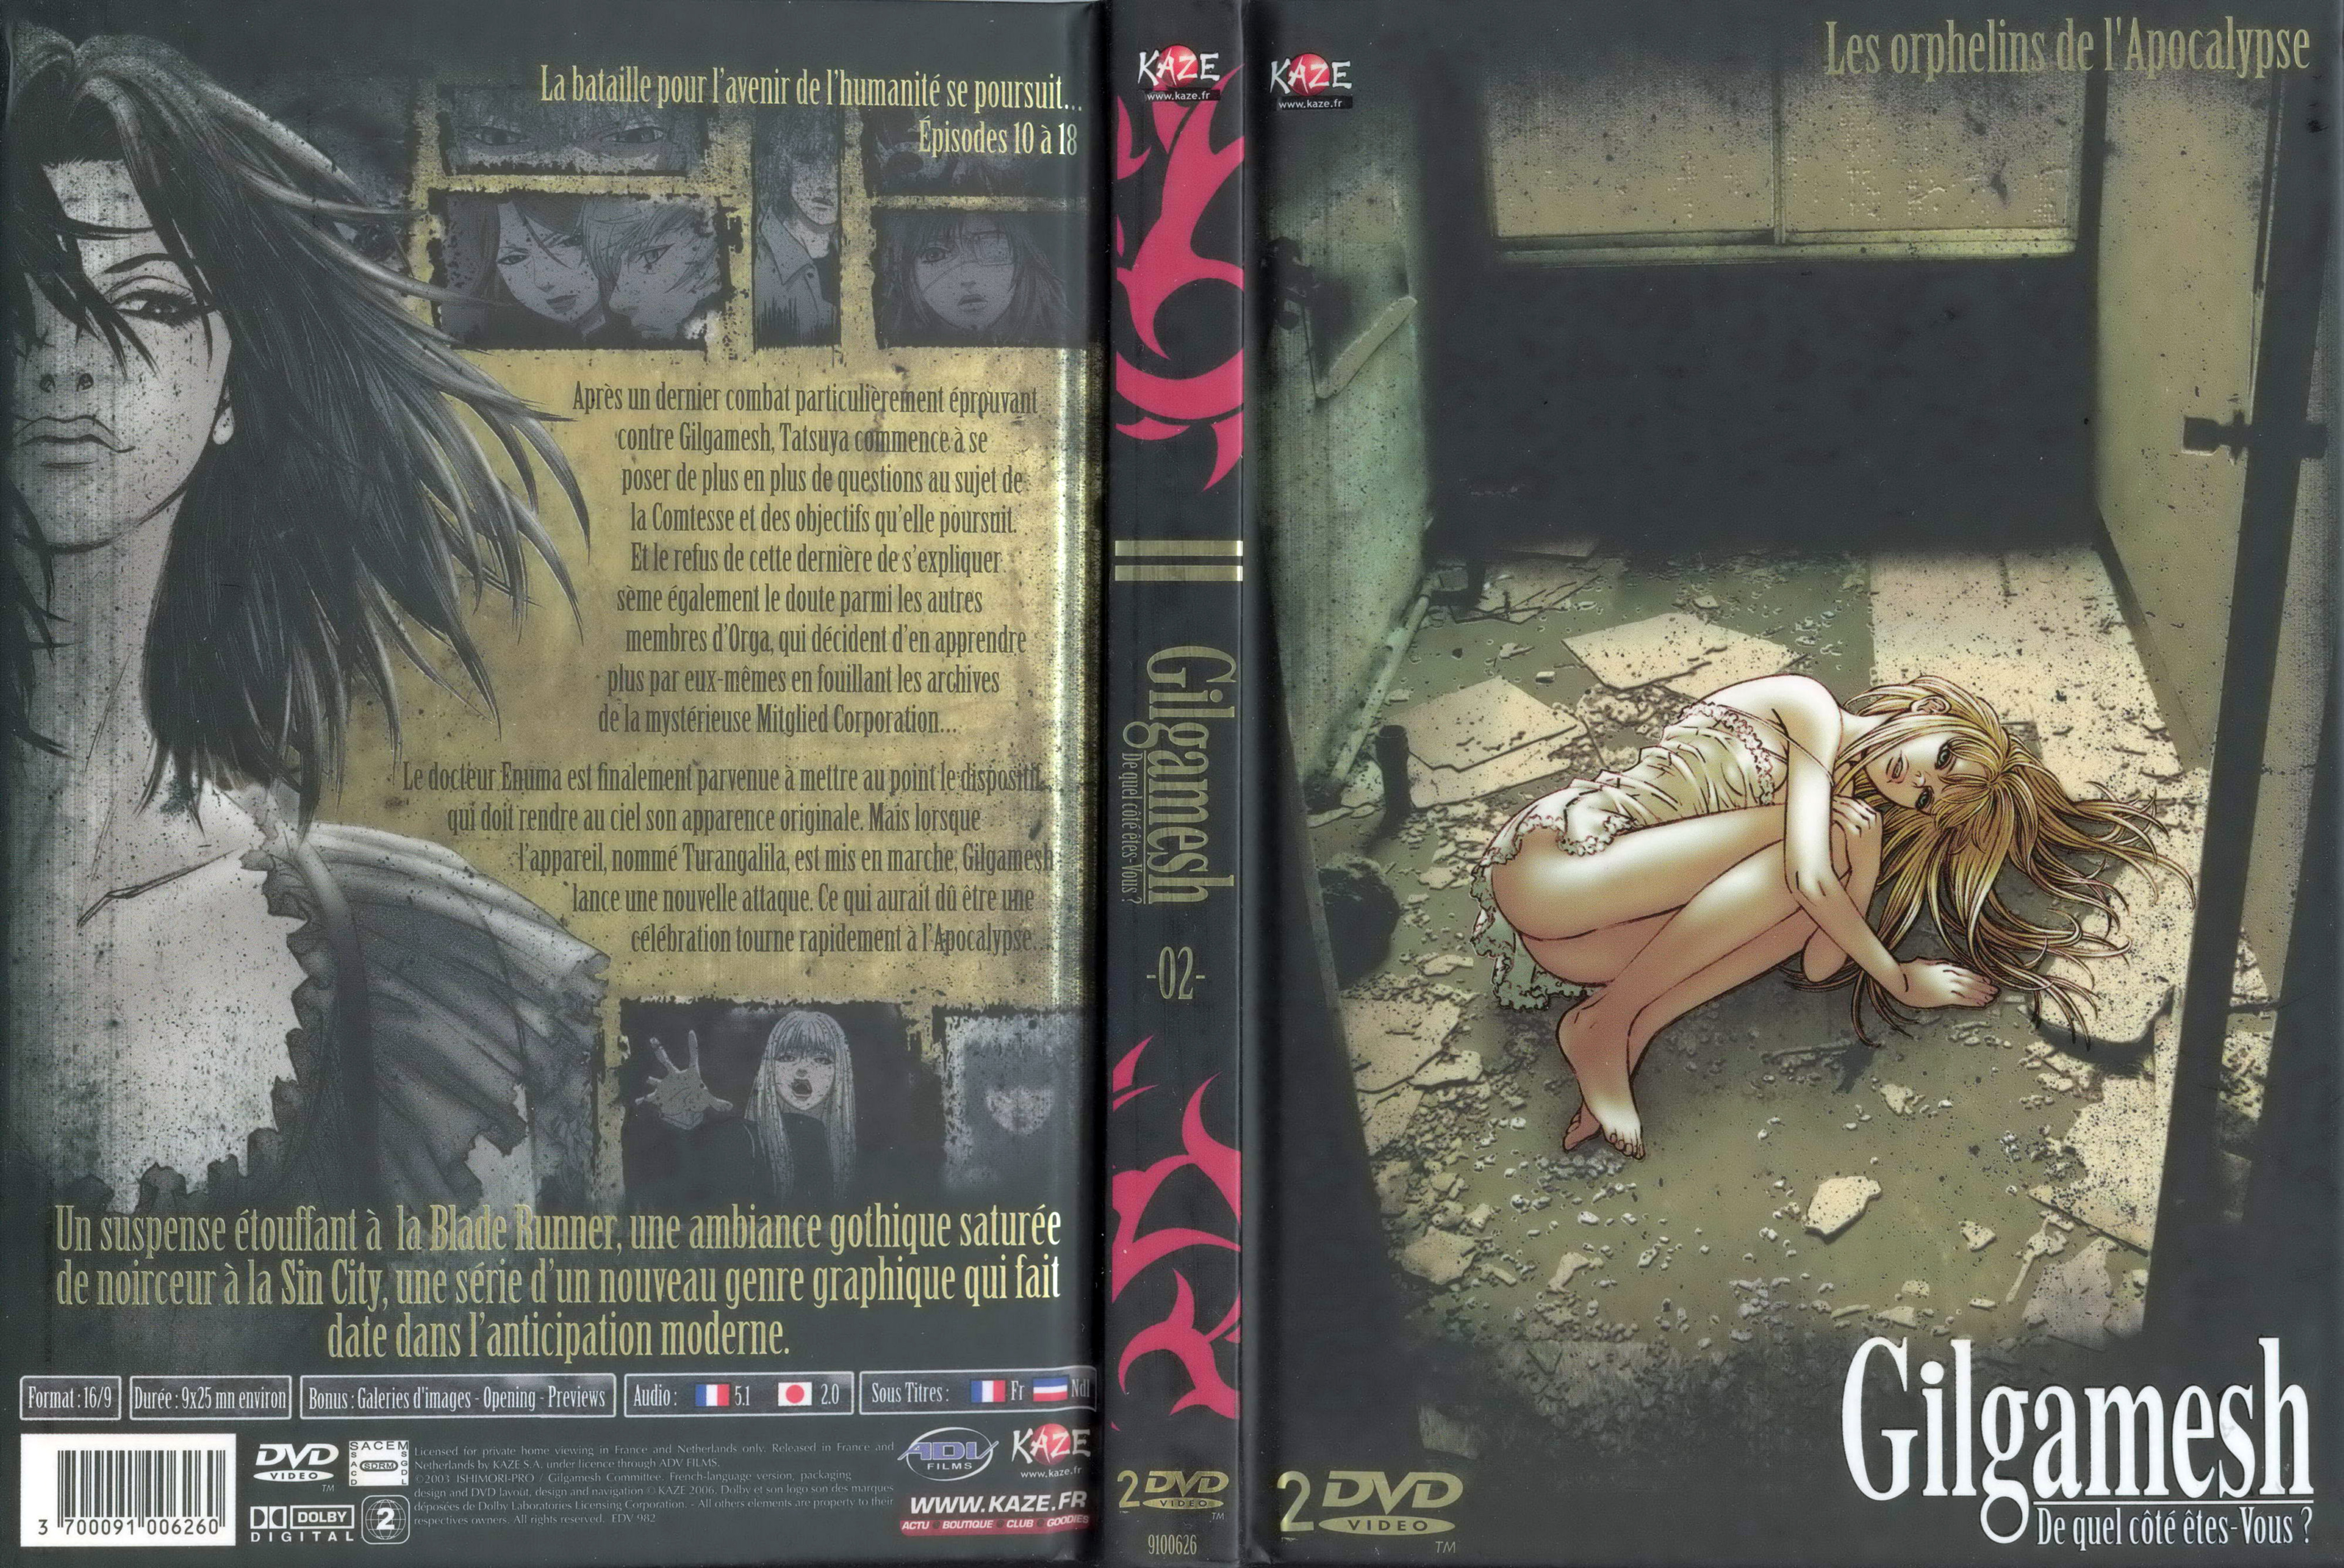 Jaquette DVD Gilgamesh vol 2